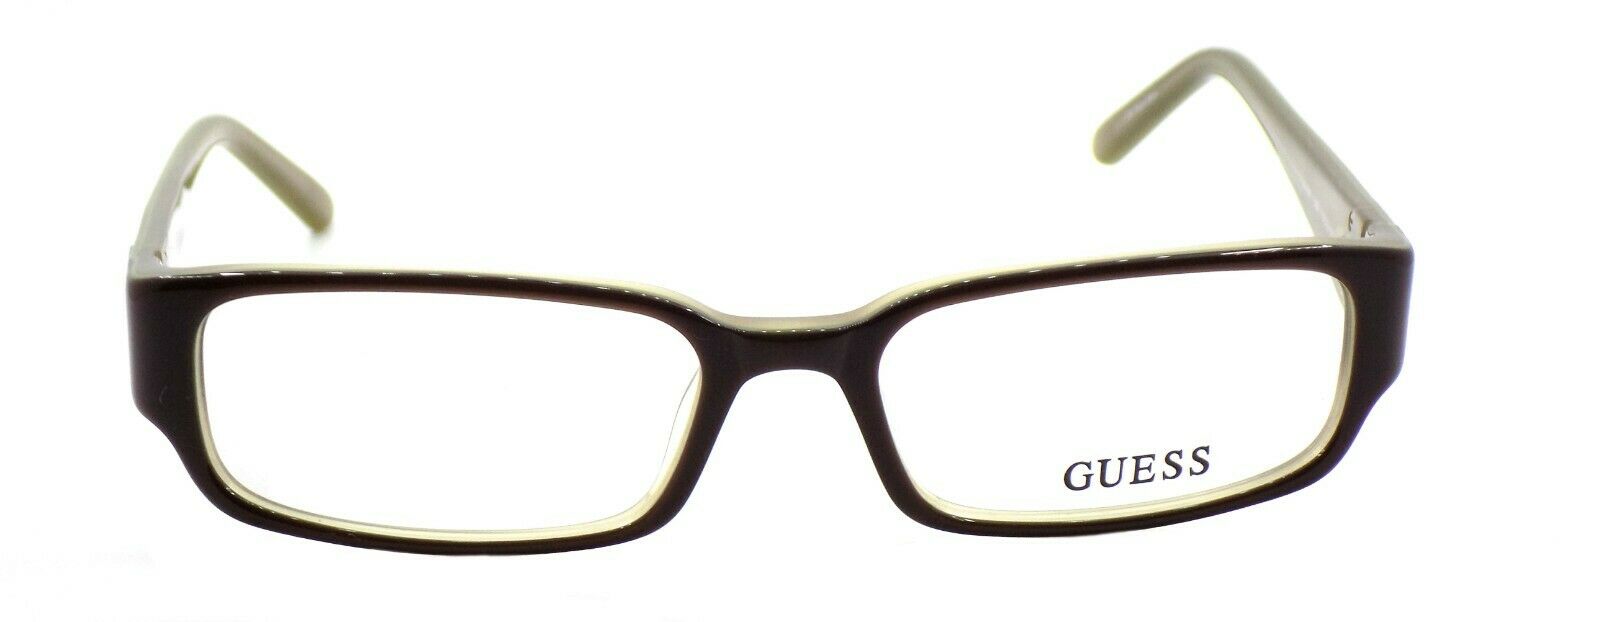 2-GUESS GU1686 BRN Women's Eyeglasses Frames Plastic 51-16-135 Brown + CASE-715583264267-IKSpecs